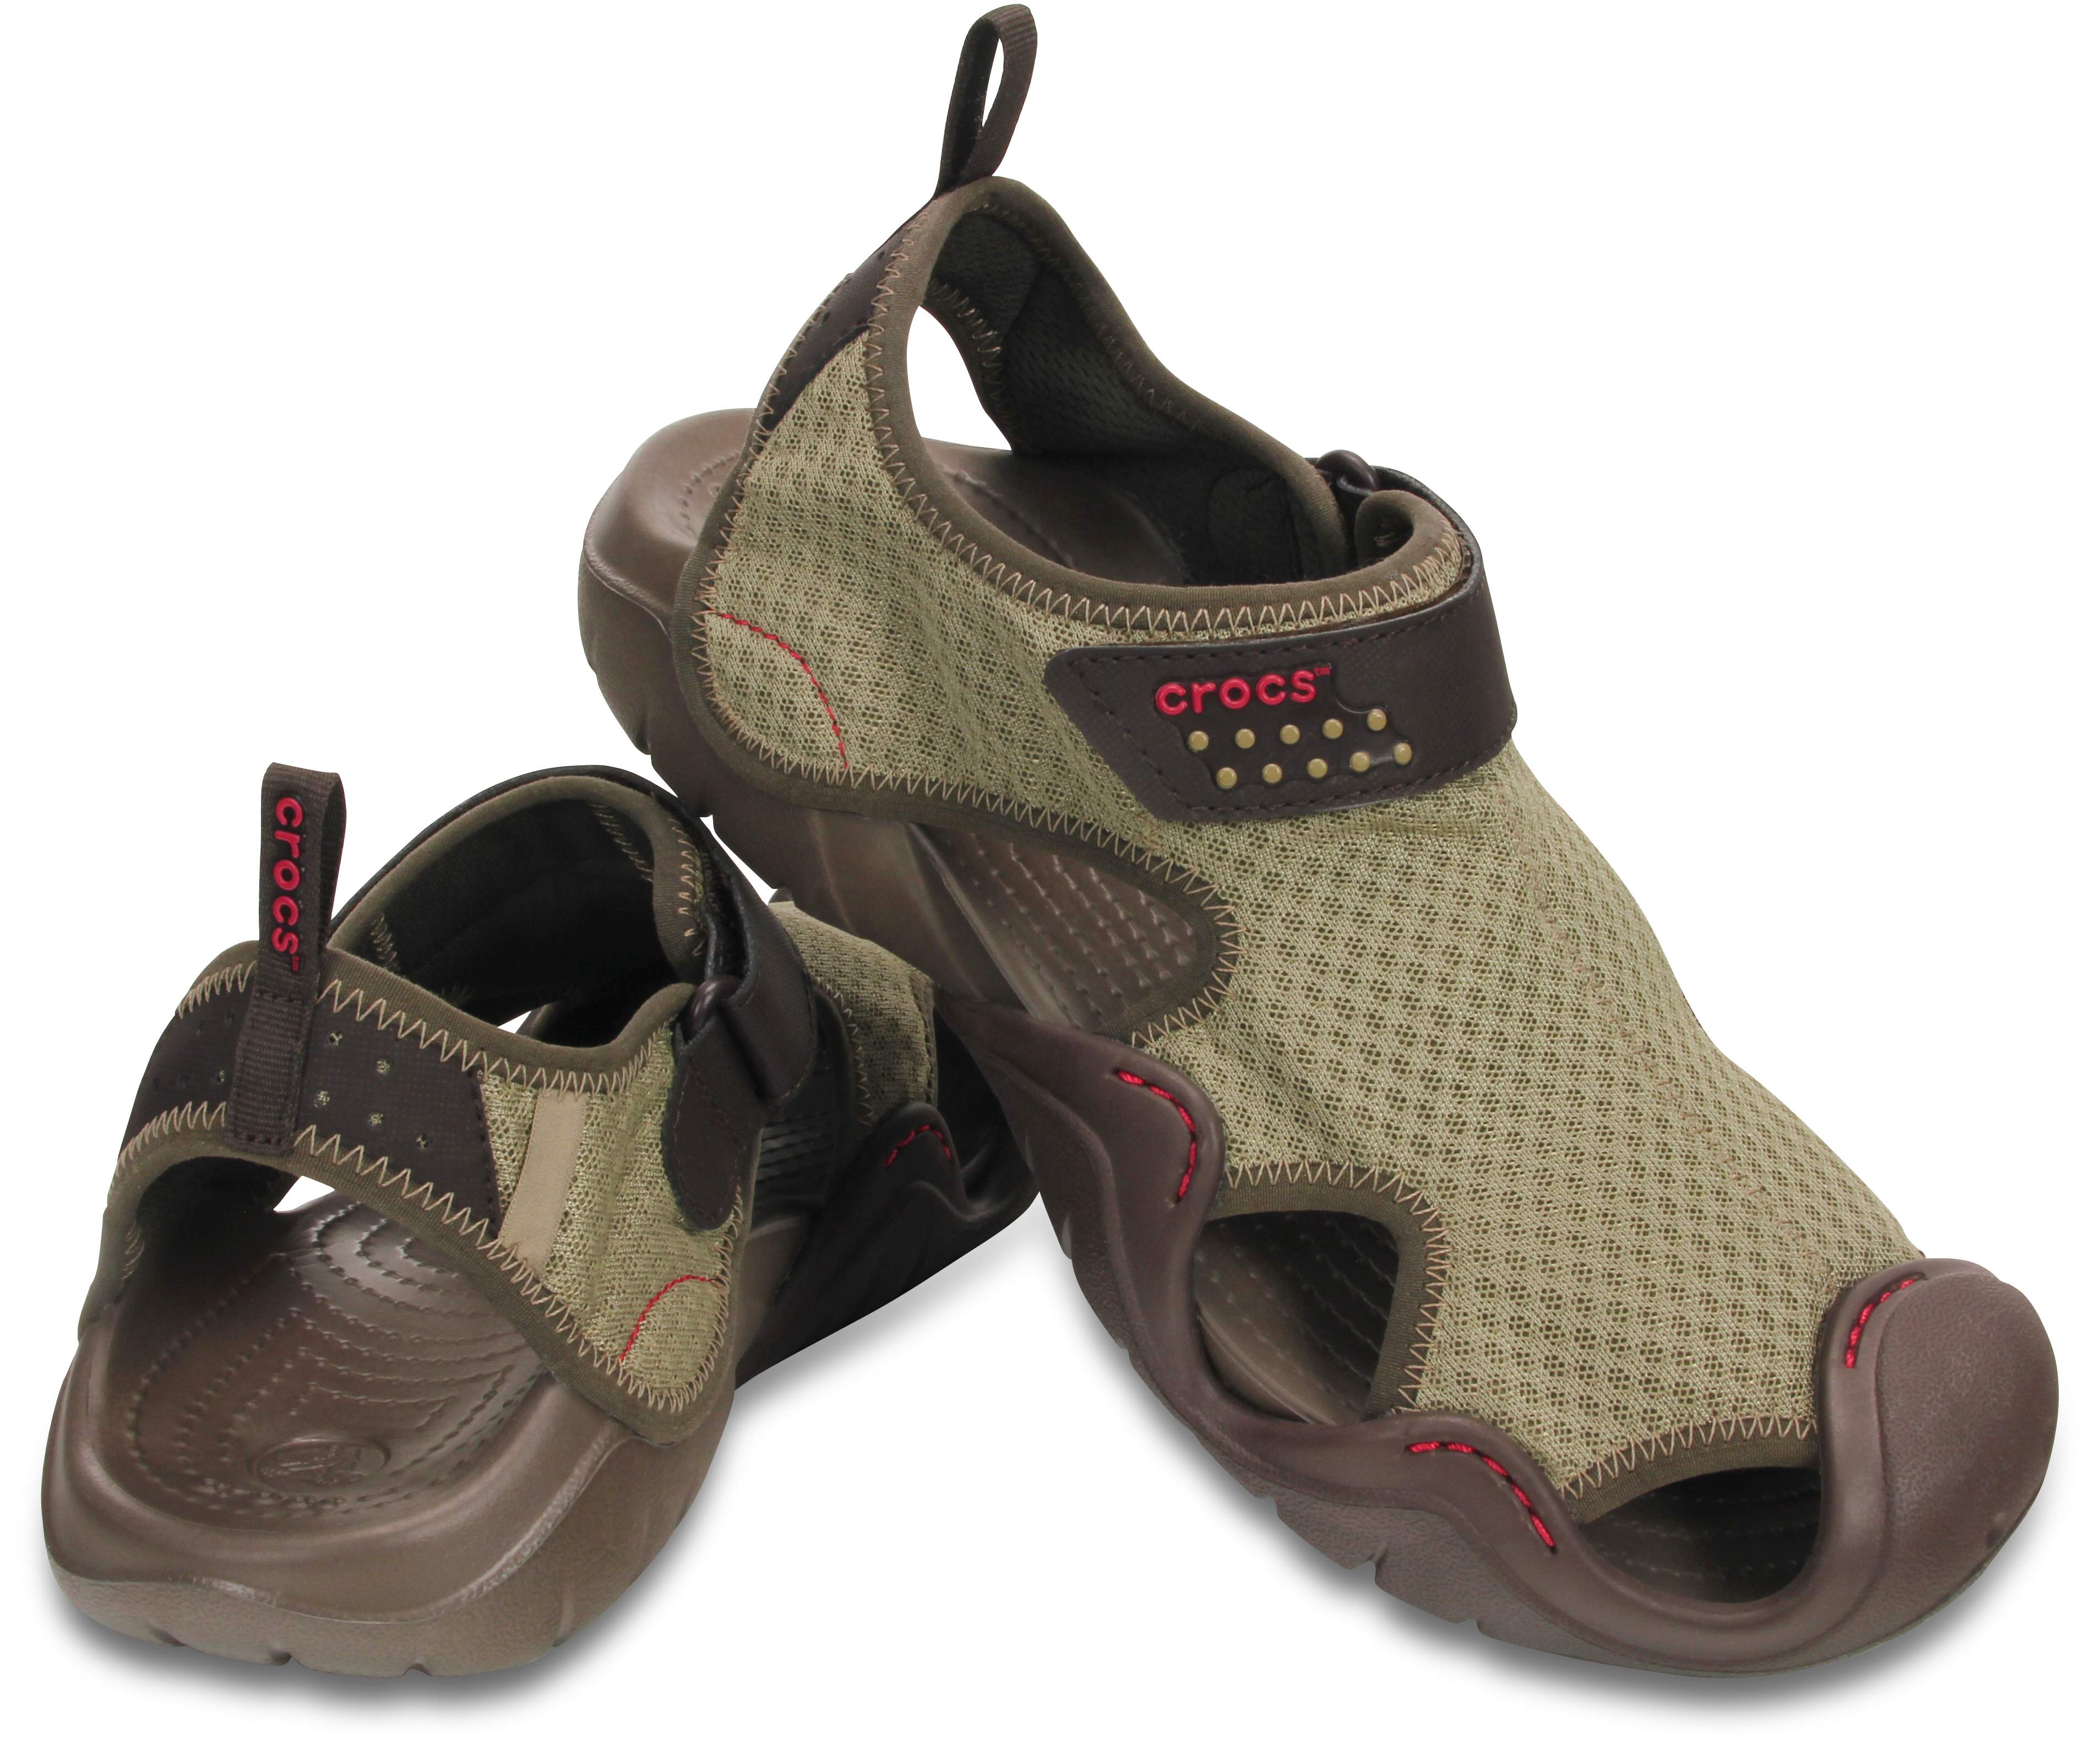 Crocs Swiftwater Mens Sandal | eBay